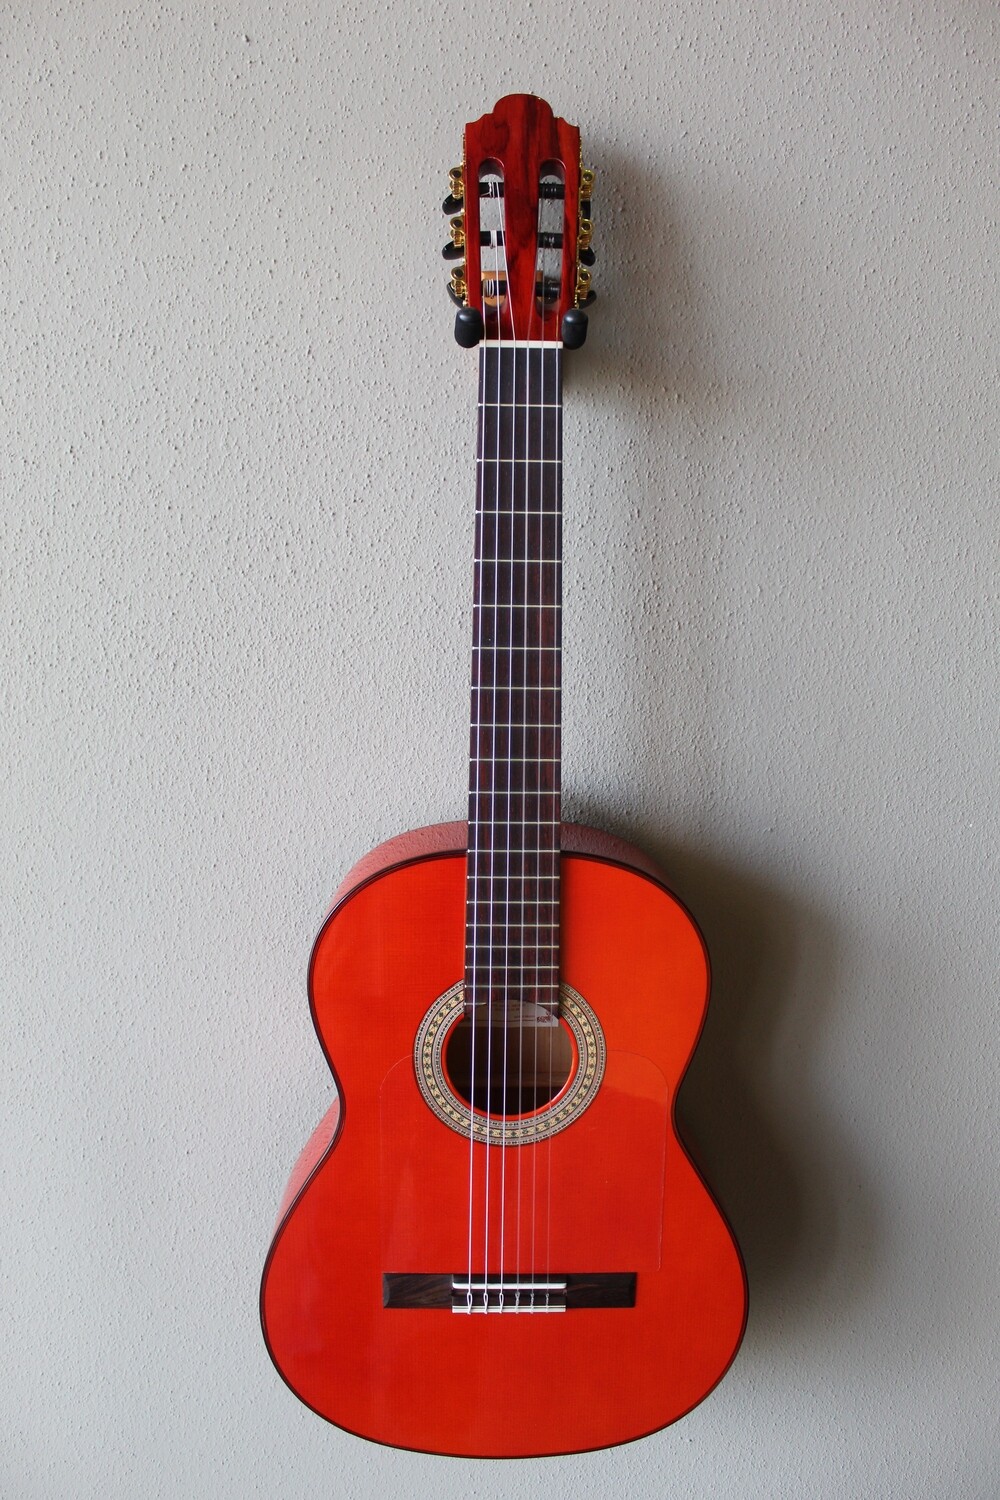 Marlon (Francisco) Navarro Flamenco Blanca Guitar - Red Stain